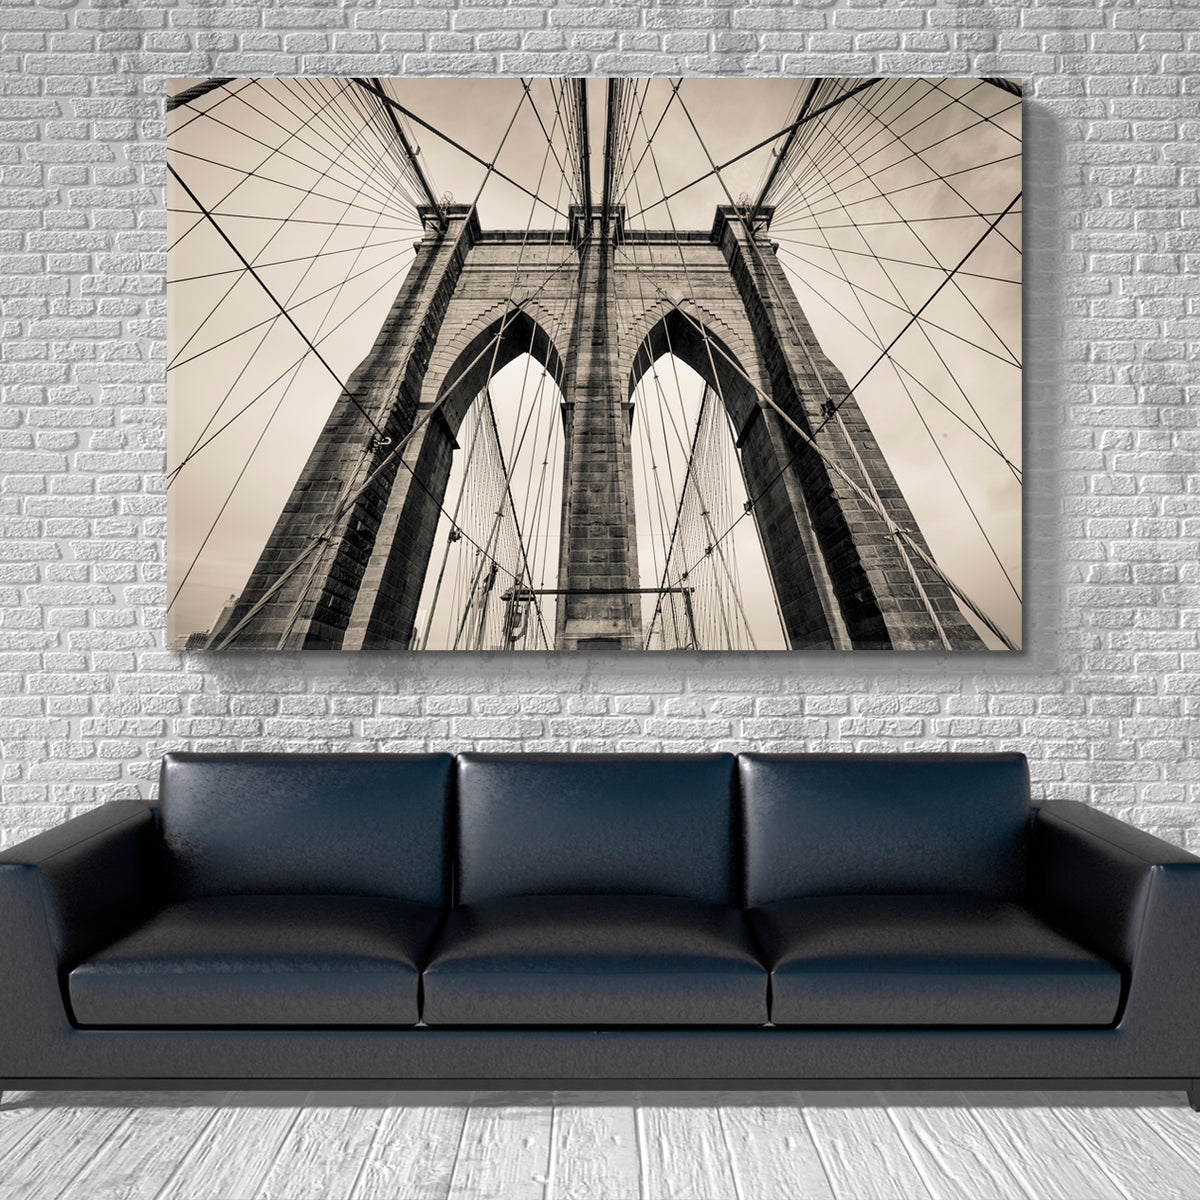 Brooklyn Bridge New York City USA Architecture Famous Landmarks Artwork Print Artesty 1 panel 24" x 16" 